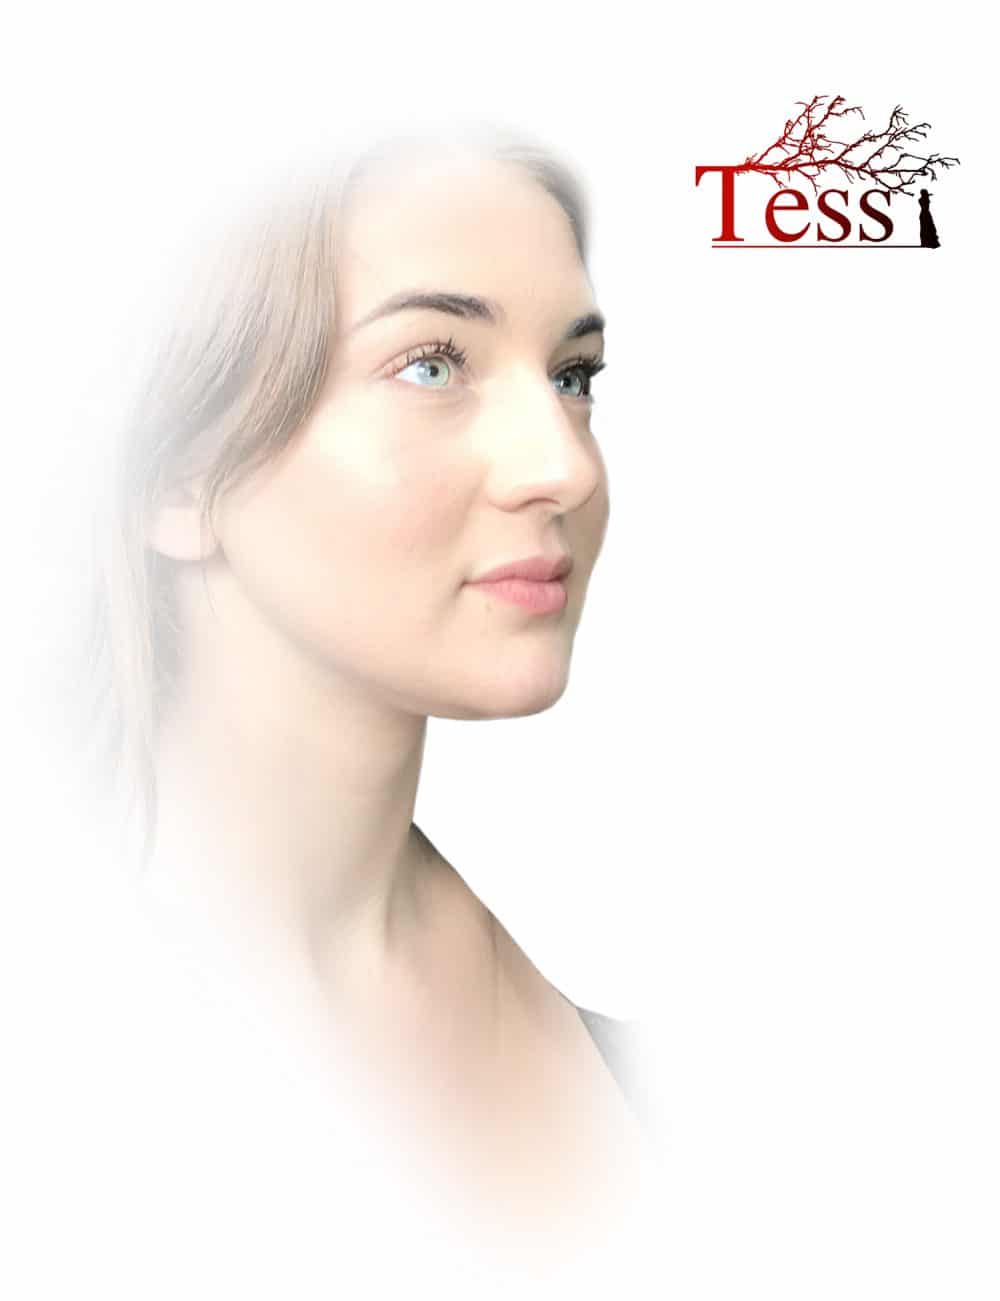 Jessie-Mae Thomas as Tess